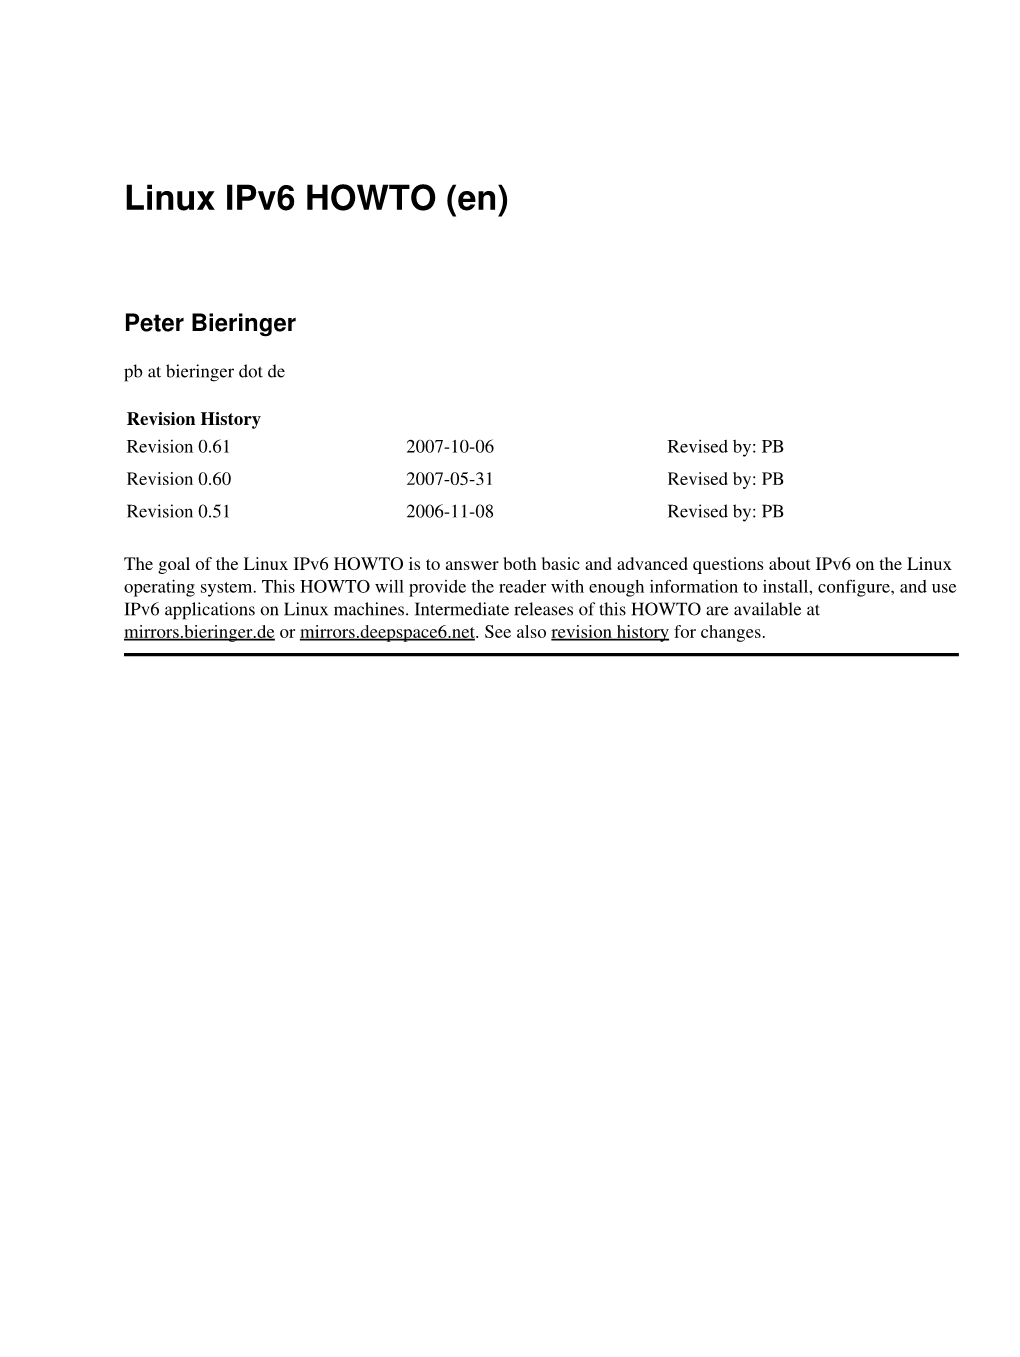 Linux Ipv6 HOWTO (En)